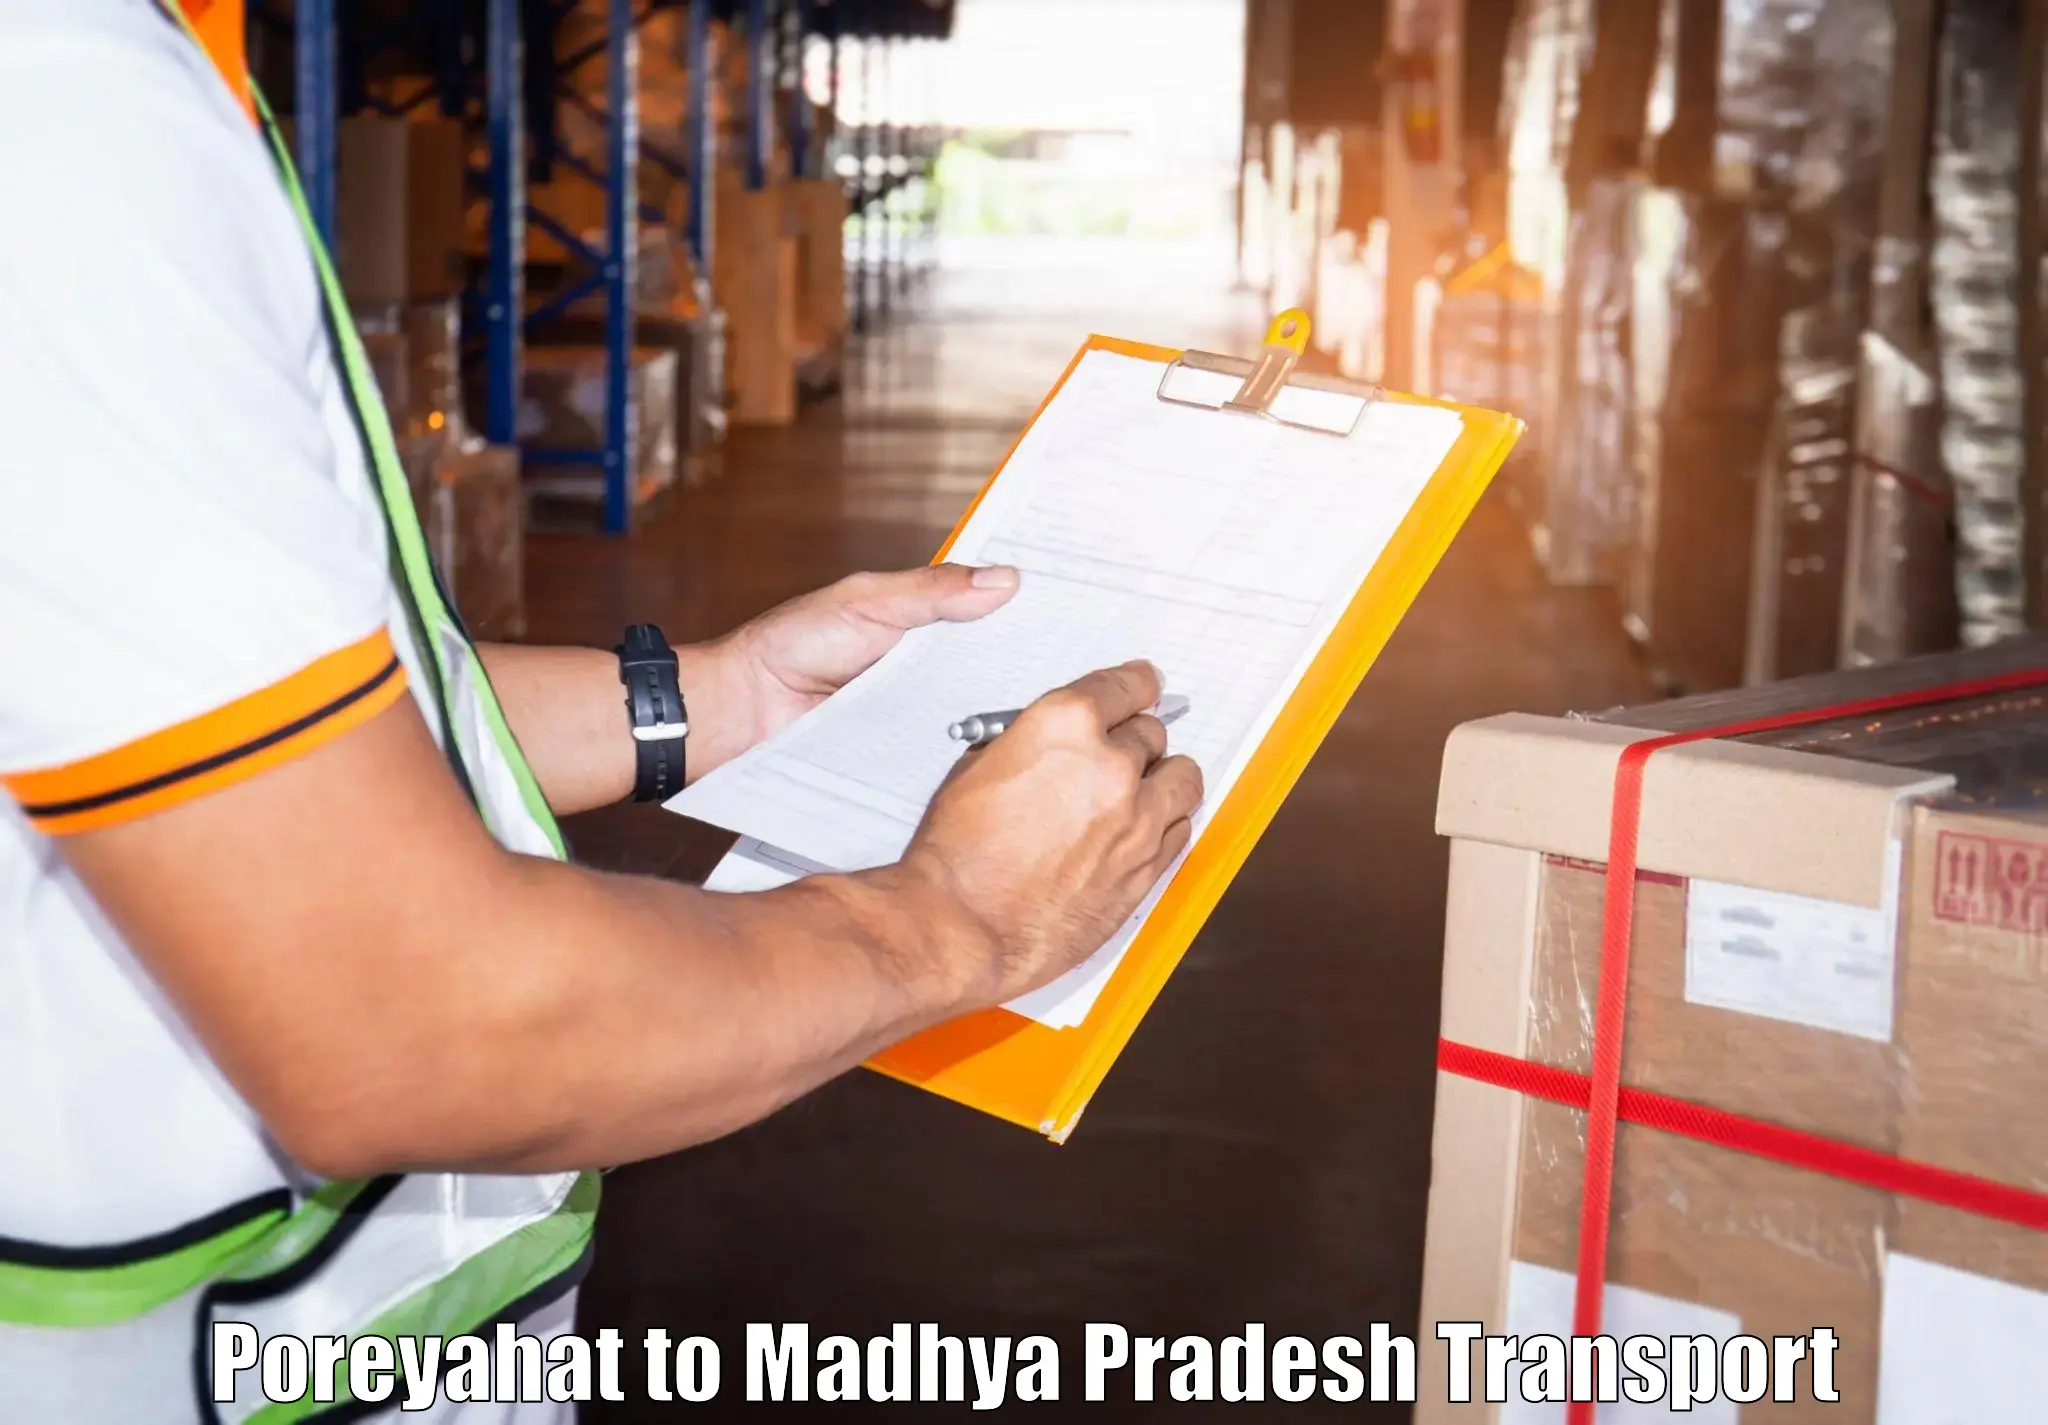 Goods delivery service Poreyahat to Nepanagar